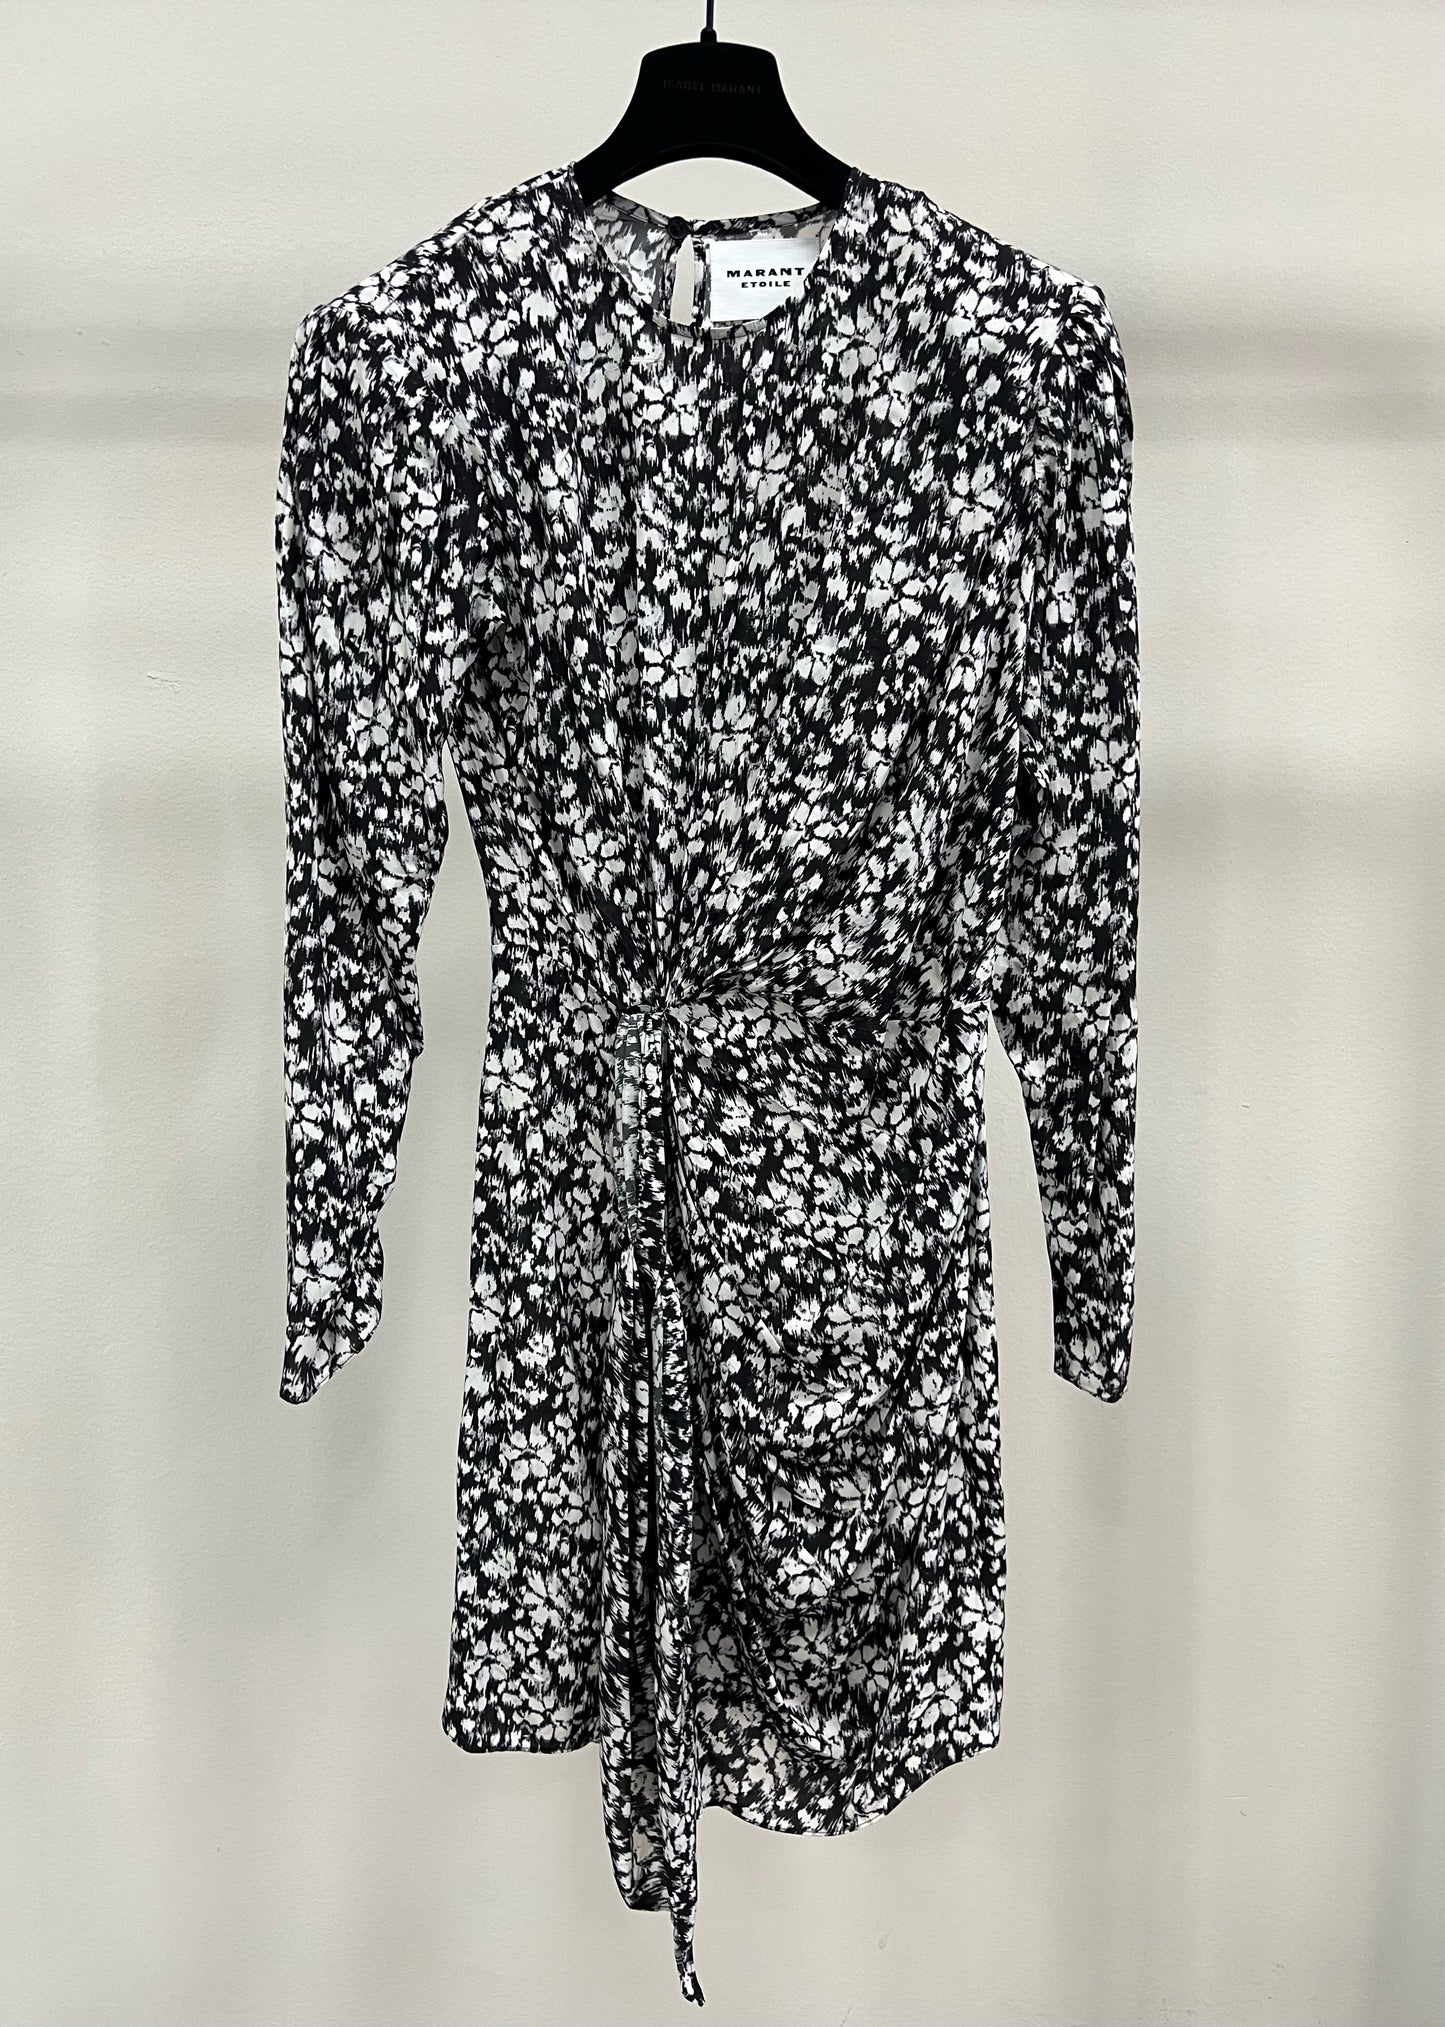 ISABEL MARANT DULCE DRESS BLACK WHITE – Nicolas Concept Store